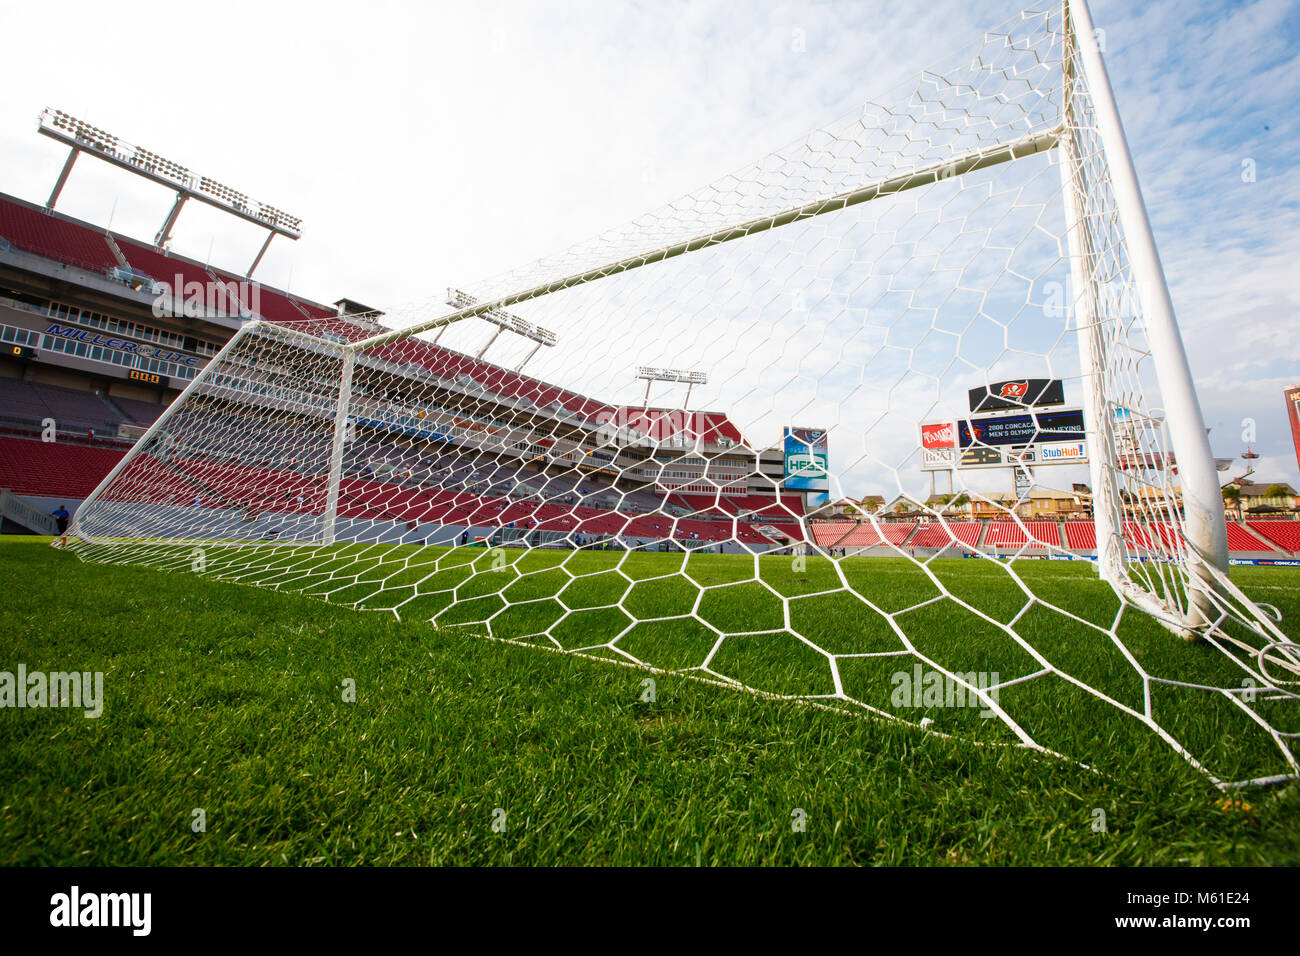 A soccer goal at Raymond James Stadium in Tampa, Florida. Stock Photo